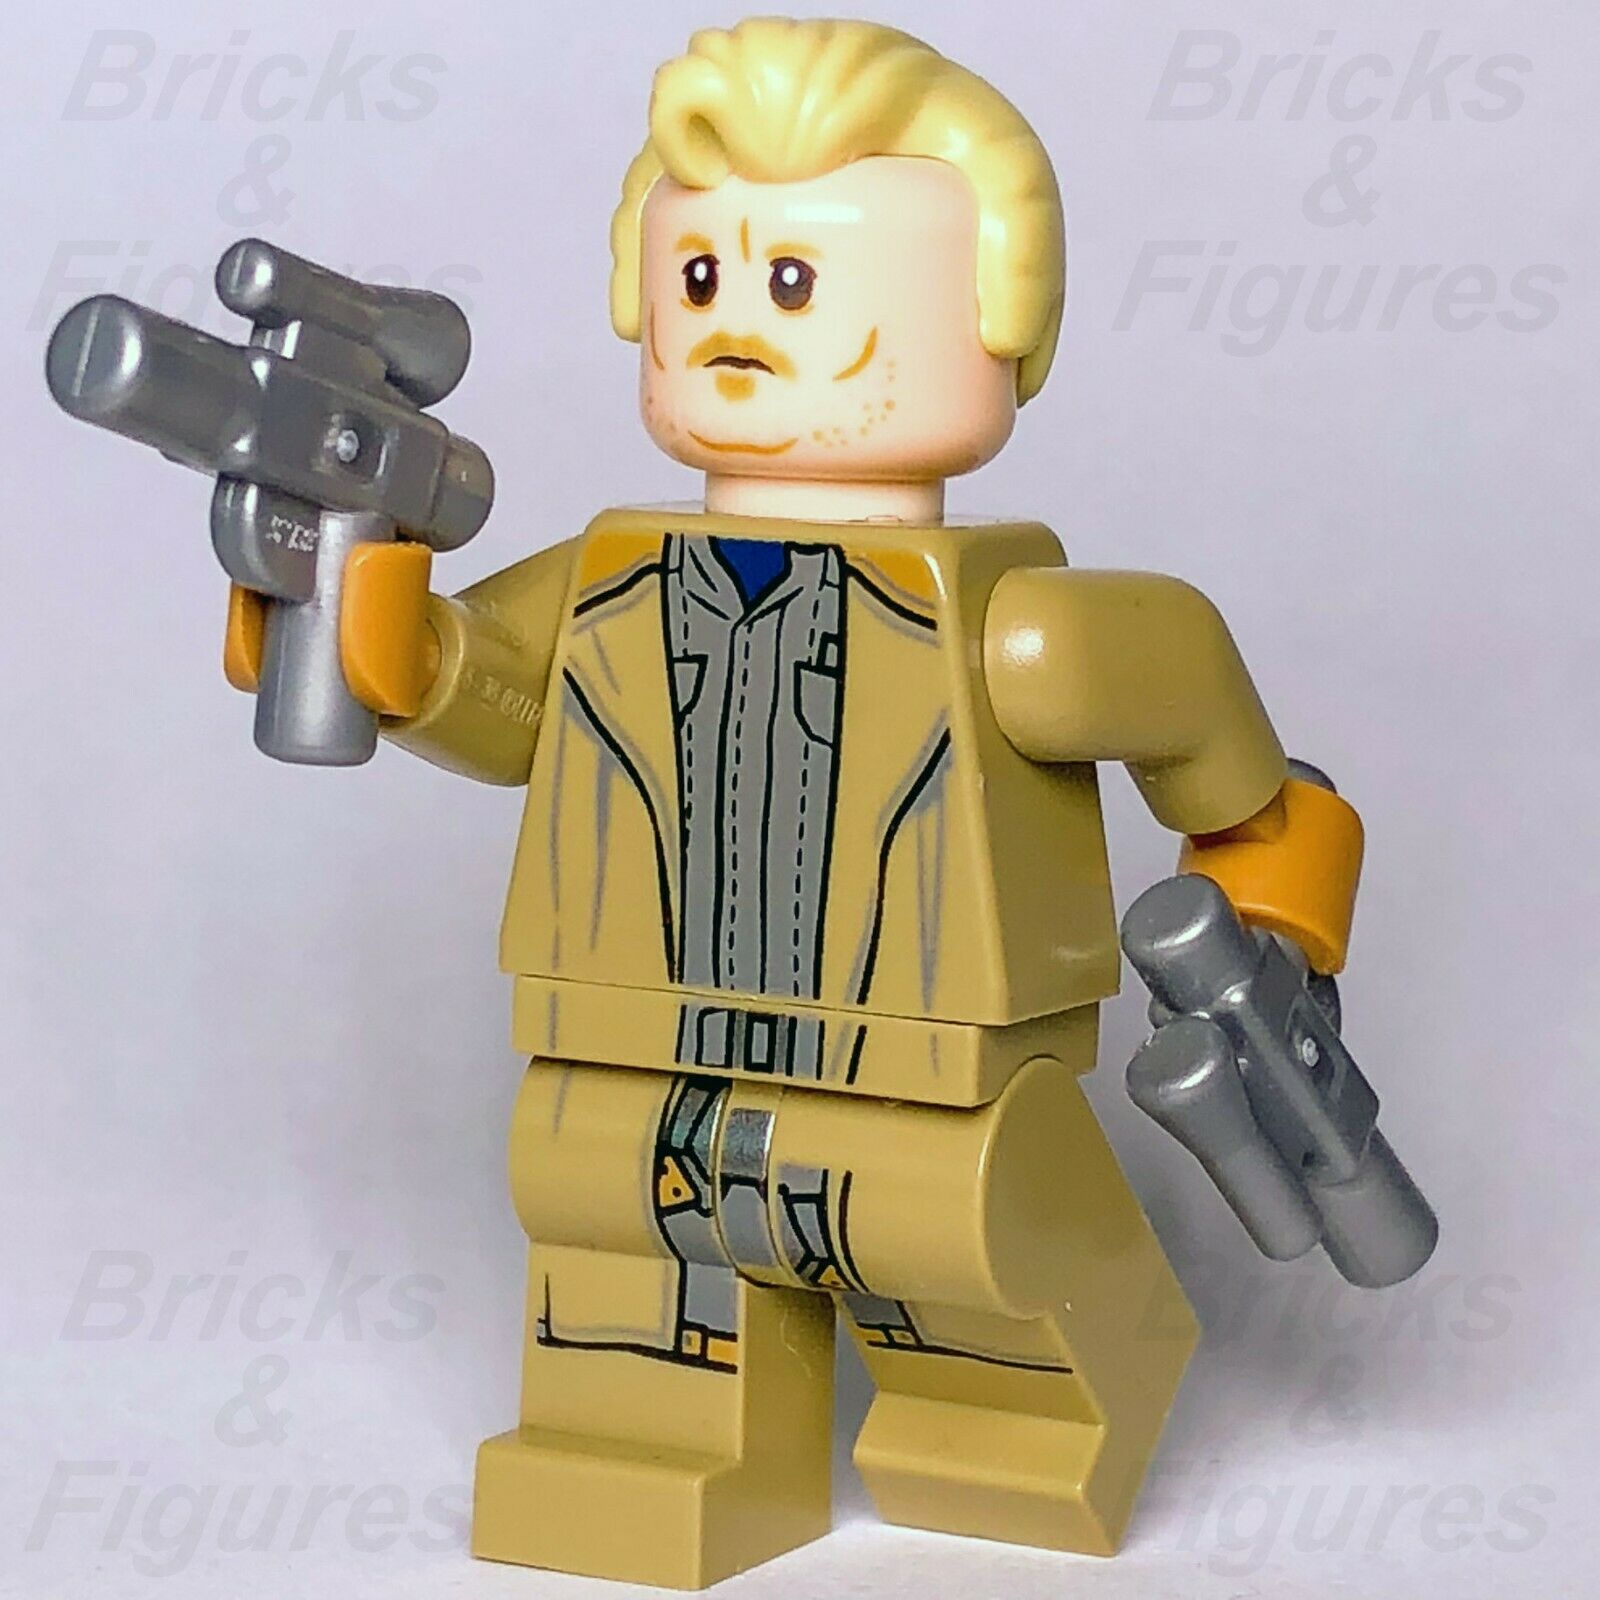 New Star Wars LEGO Tobias Beckett Crimson Dawn Minifigure from Solo Set 75215 - Bricks & Figures